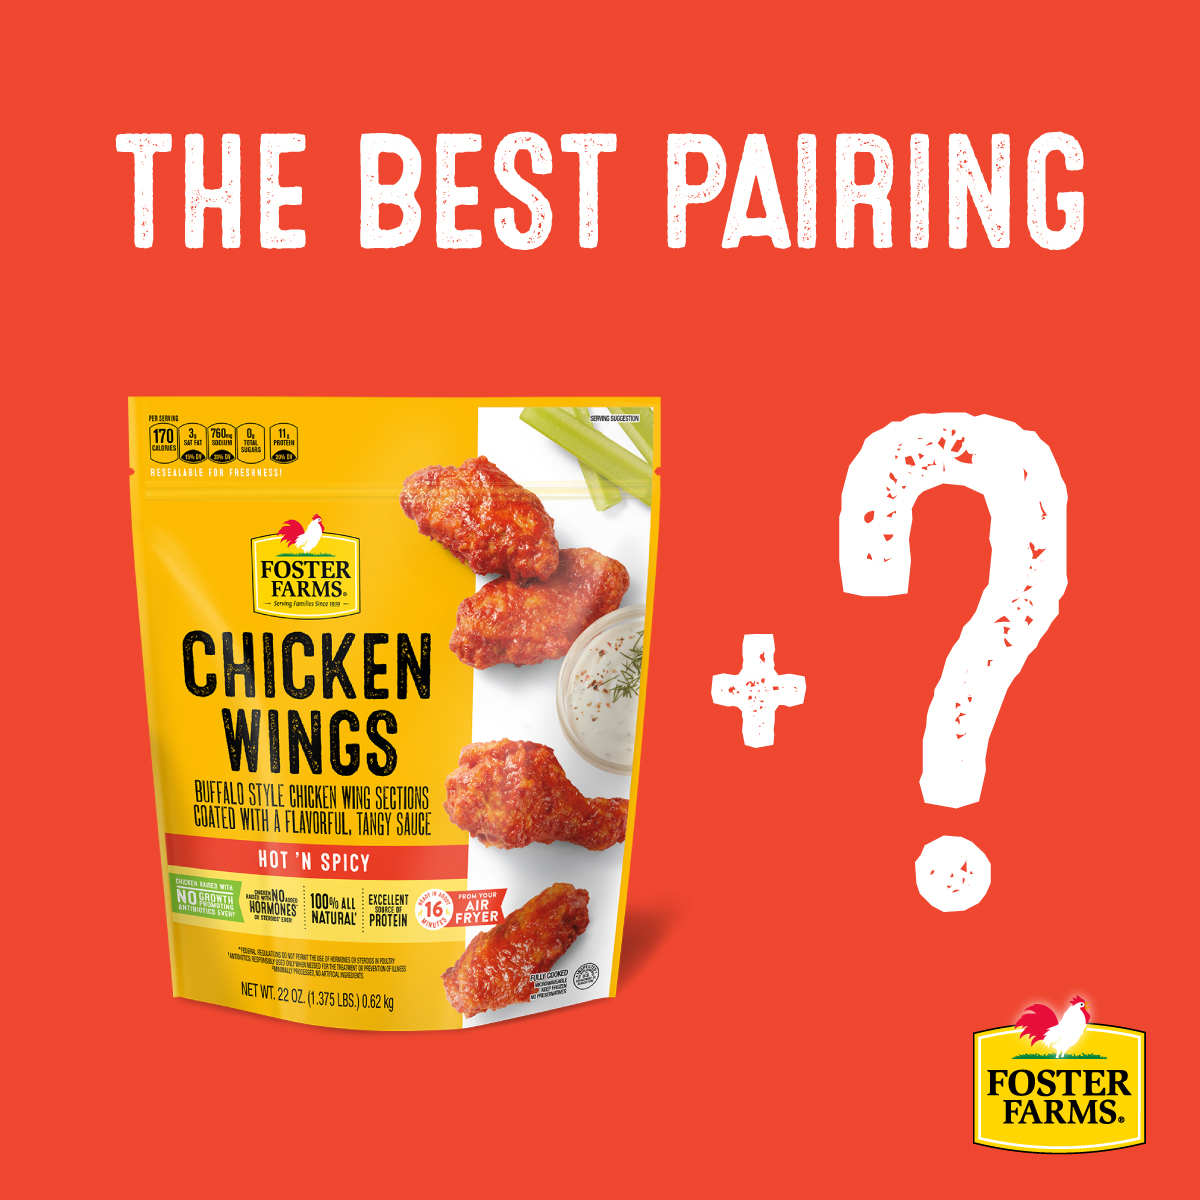 Let us know in the comments below! #fosterfarms #thebestpairing #bestpairing #pairing #bestcombo #chicken #wings #chickenwings #hotnspicy